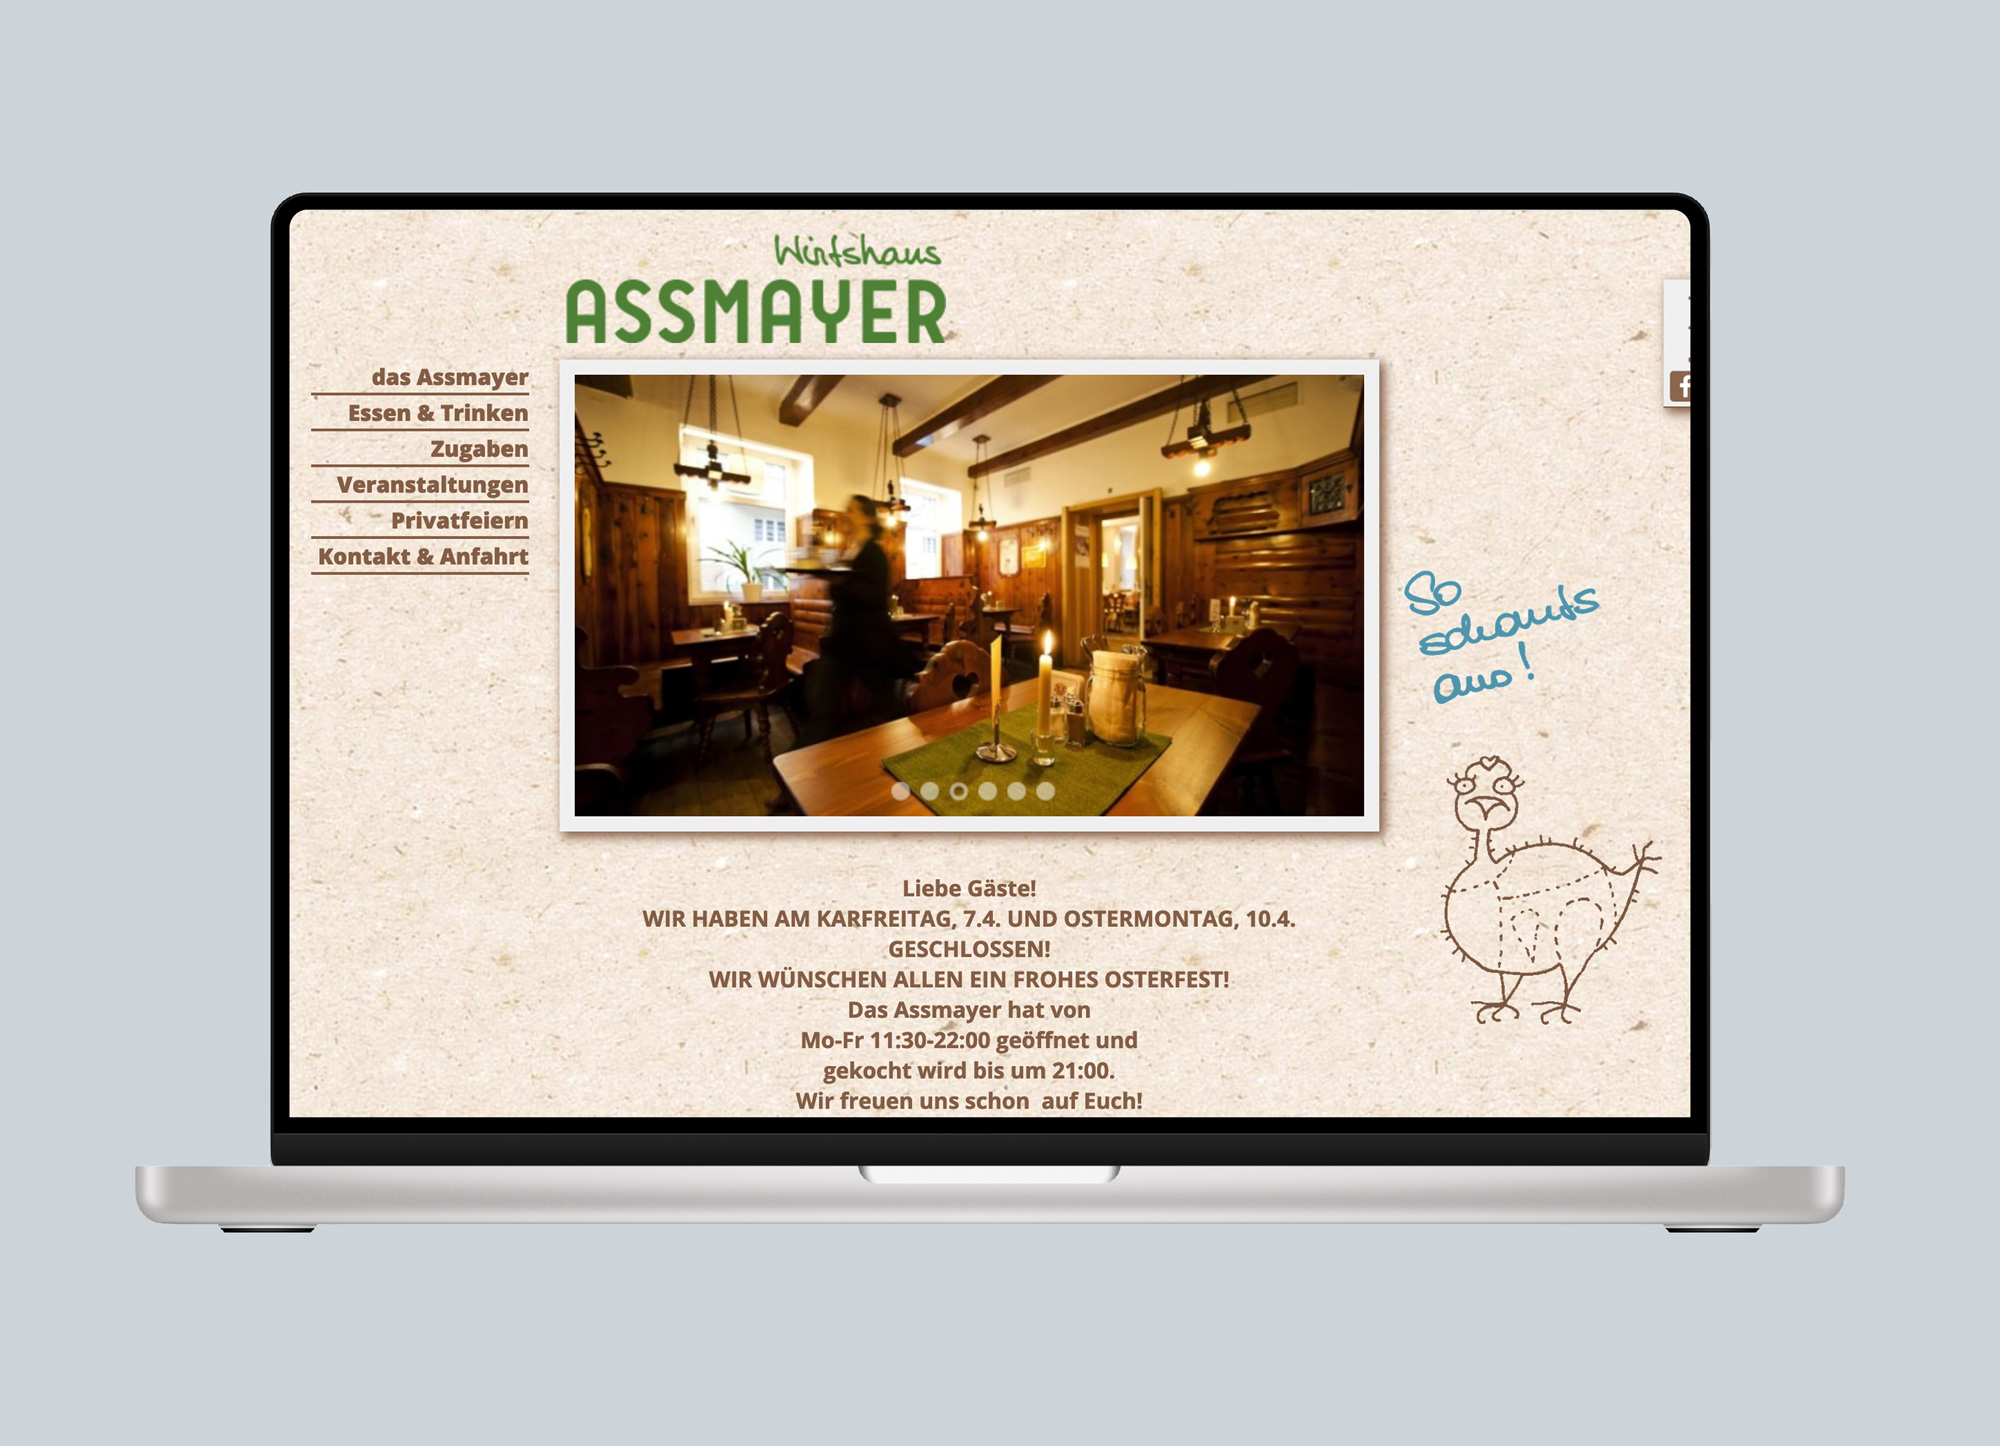 assmayer_web_pavicsits-1